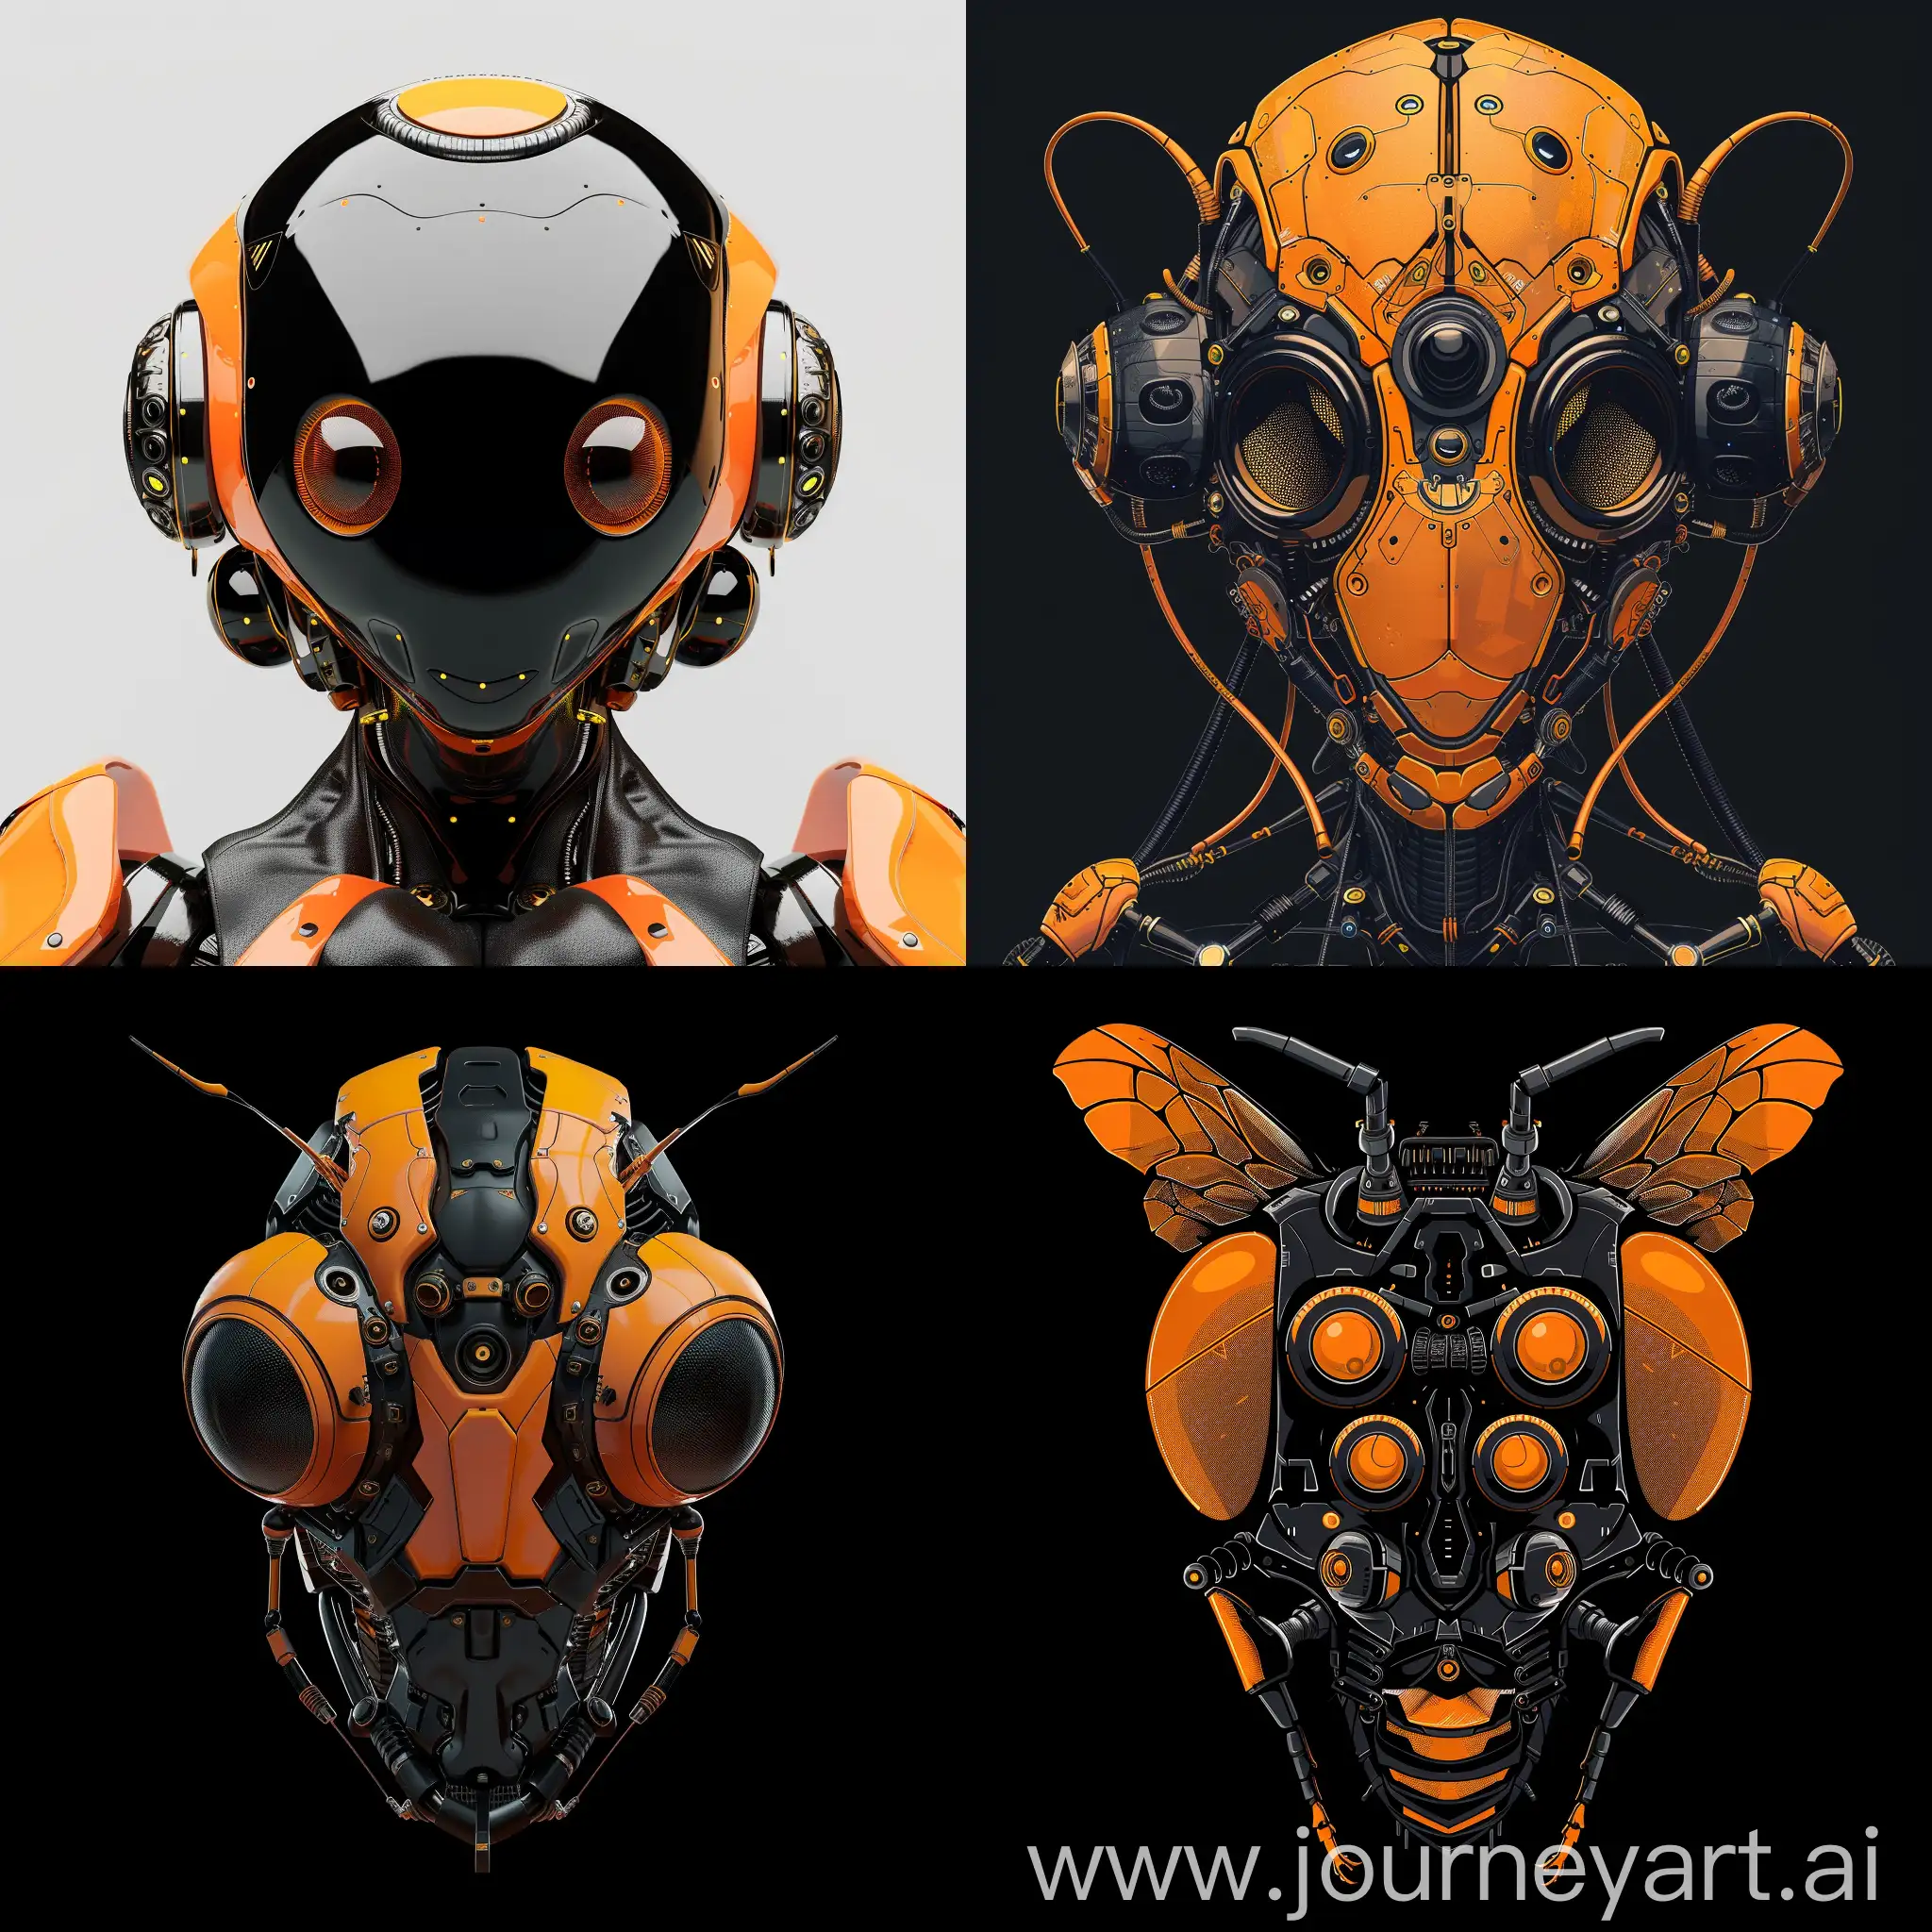 Futuristic-RobotBee-Avatar-with-Vibrant-Orange-and-Black-Colors